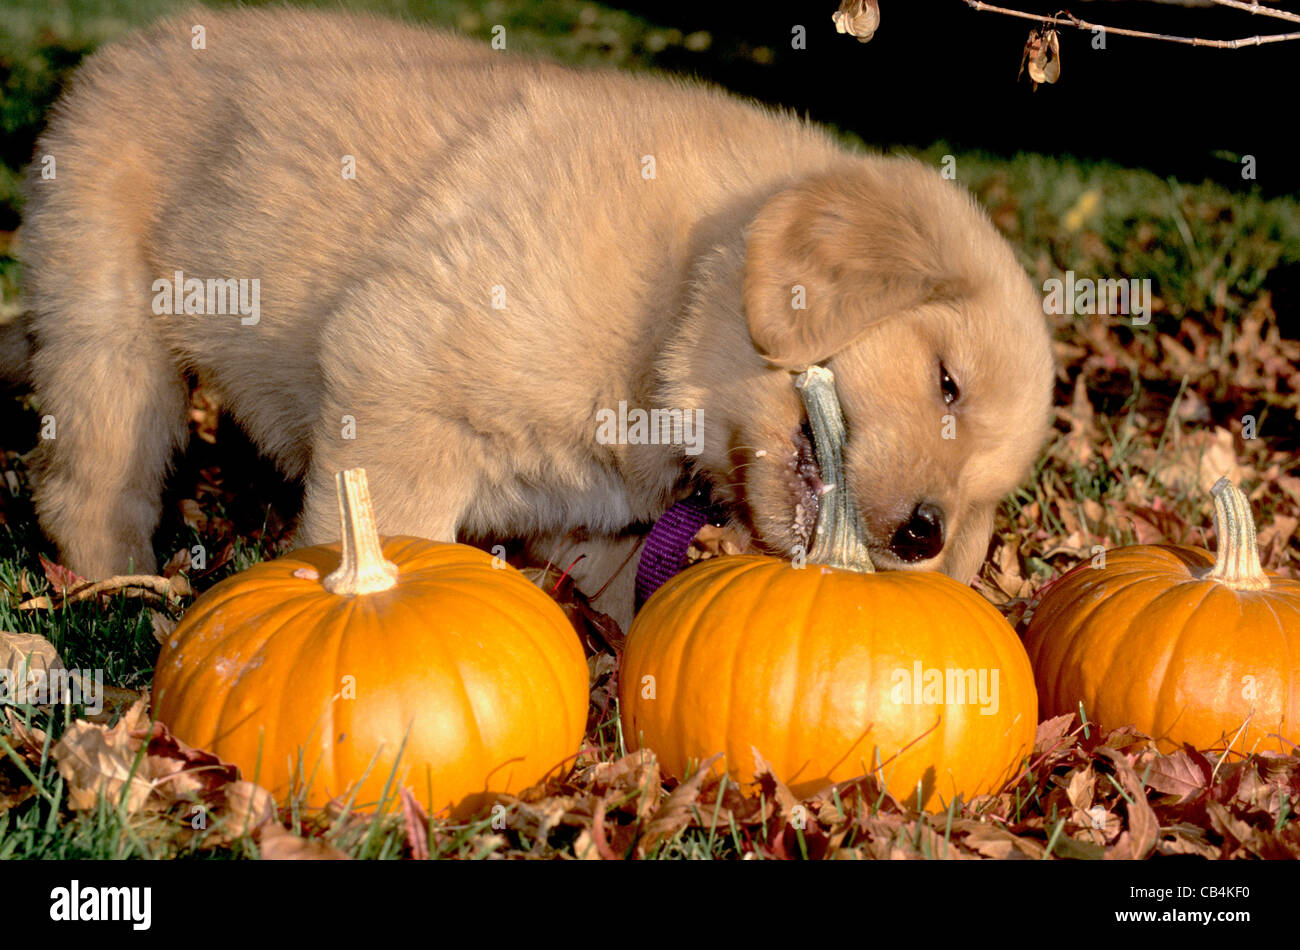 Golden Retriever Puppy Chewing On A Pumpkin Stock Photo Alamy